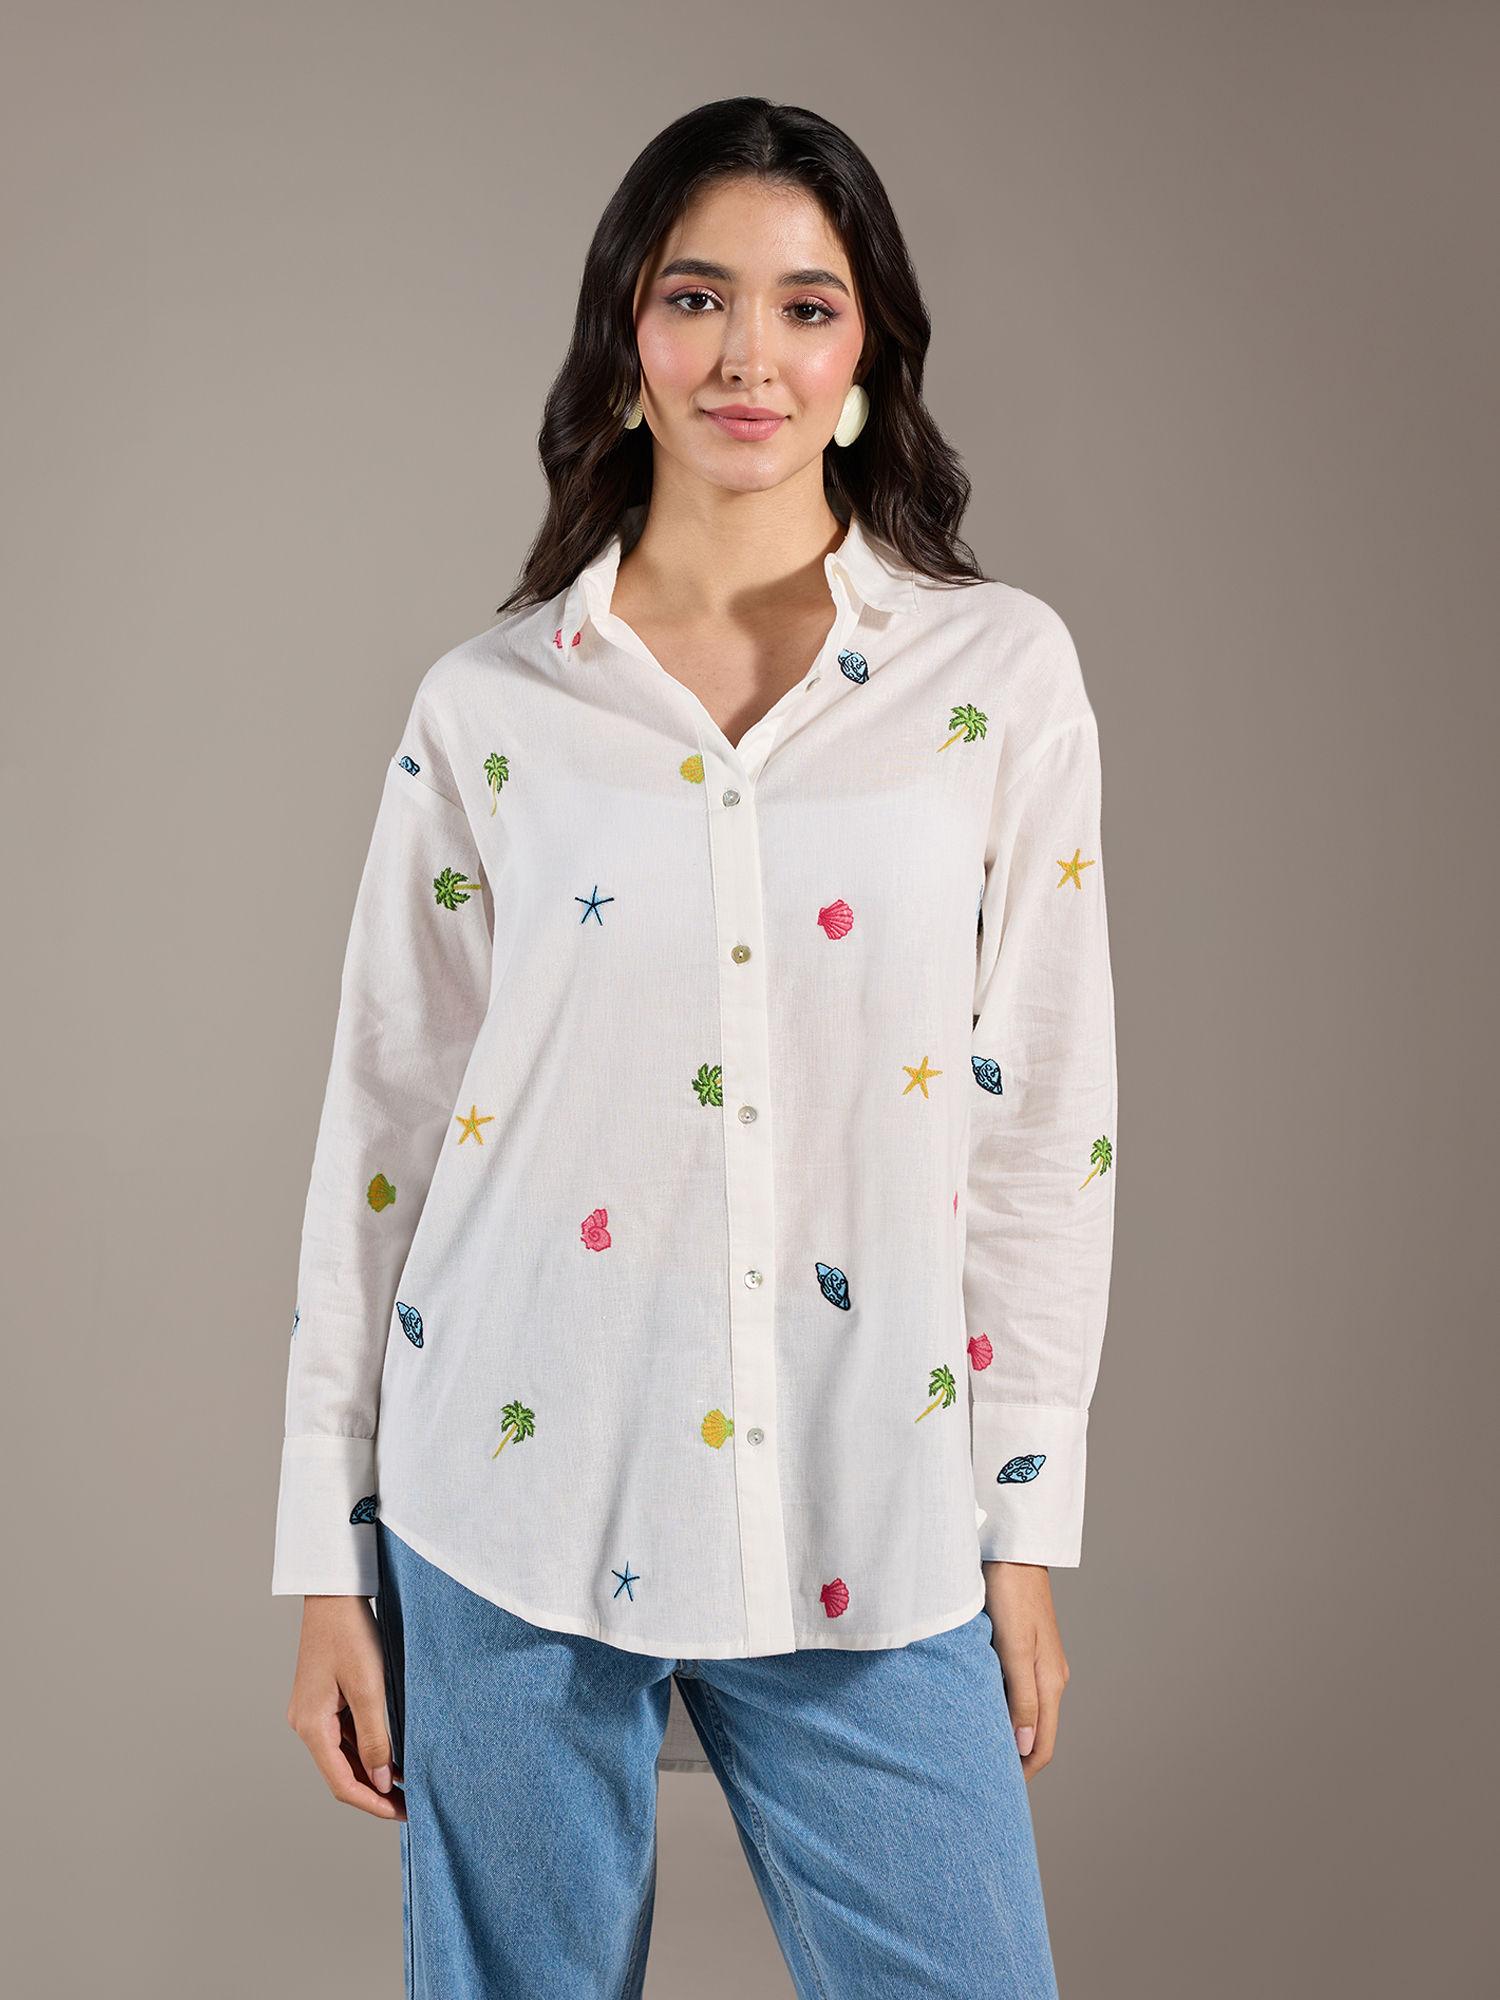 white embroidered full sleeves shirt